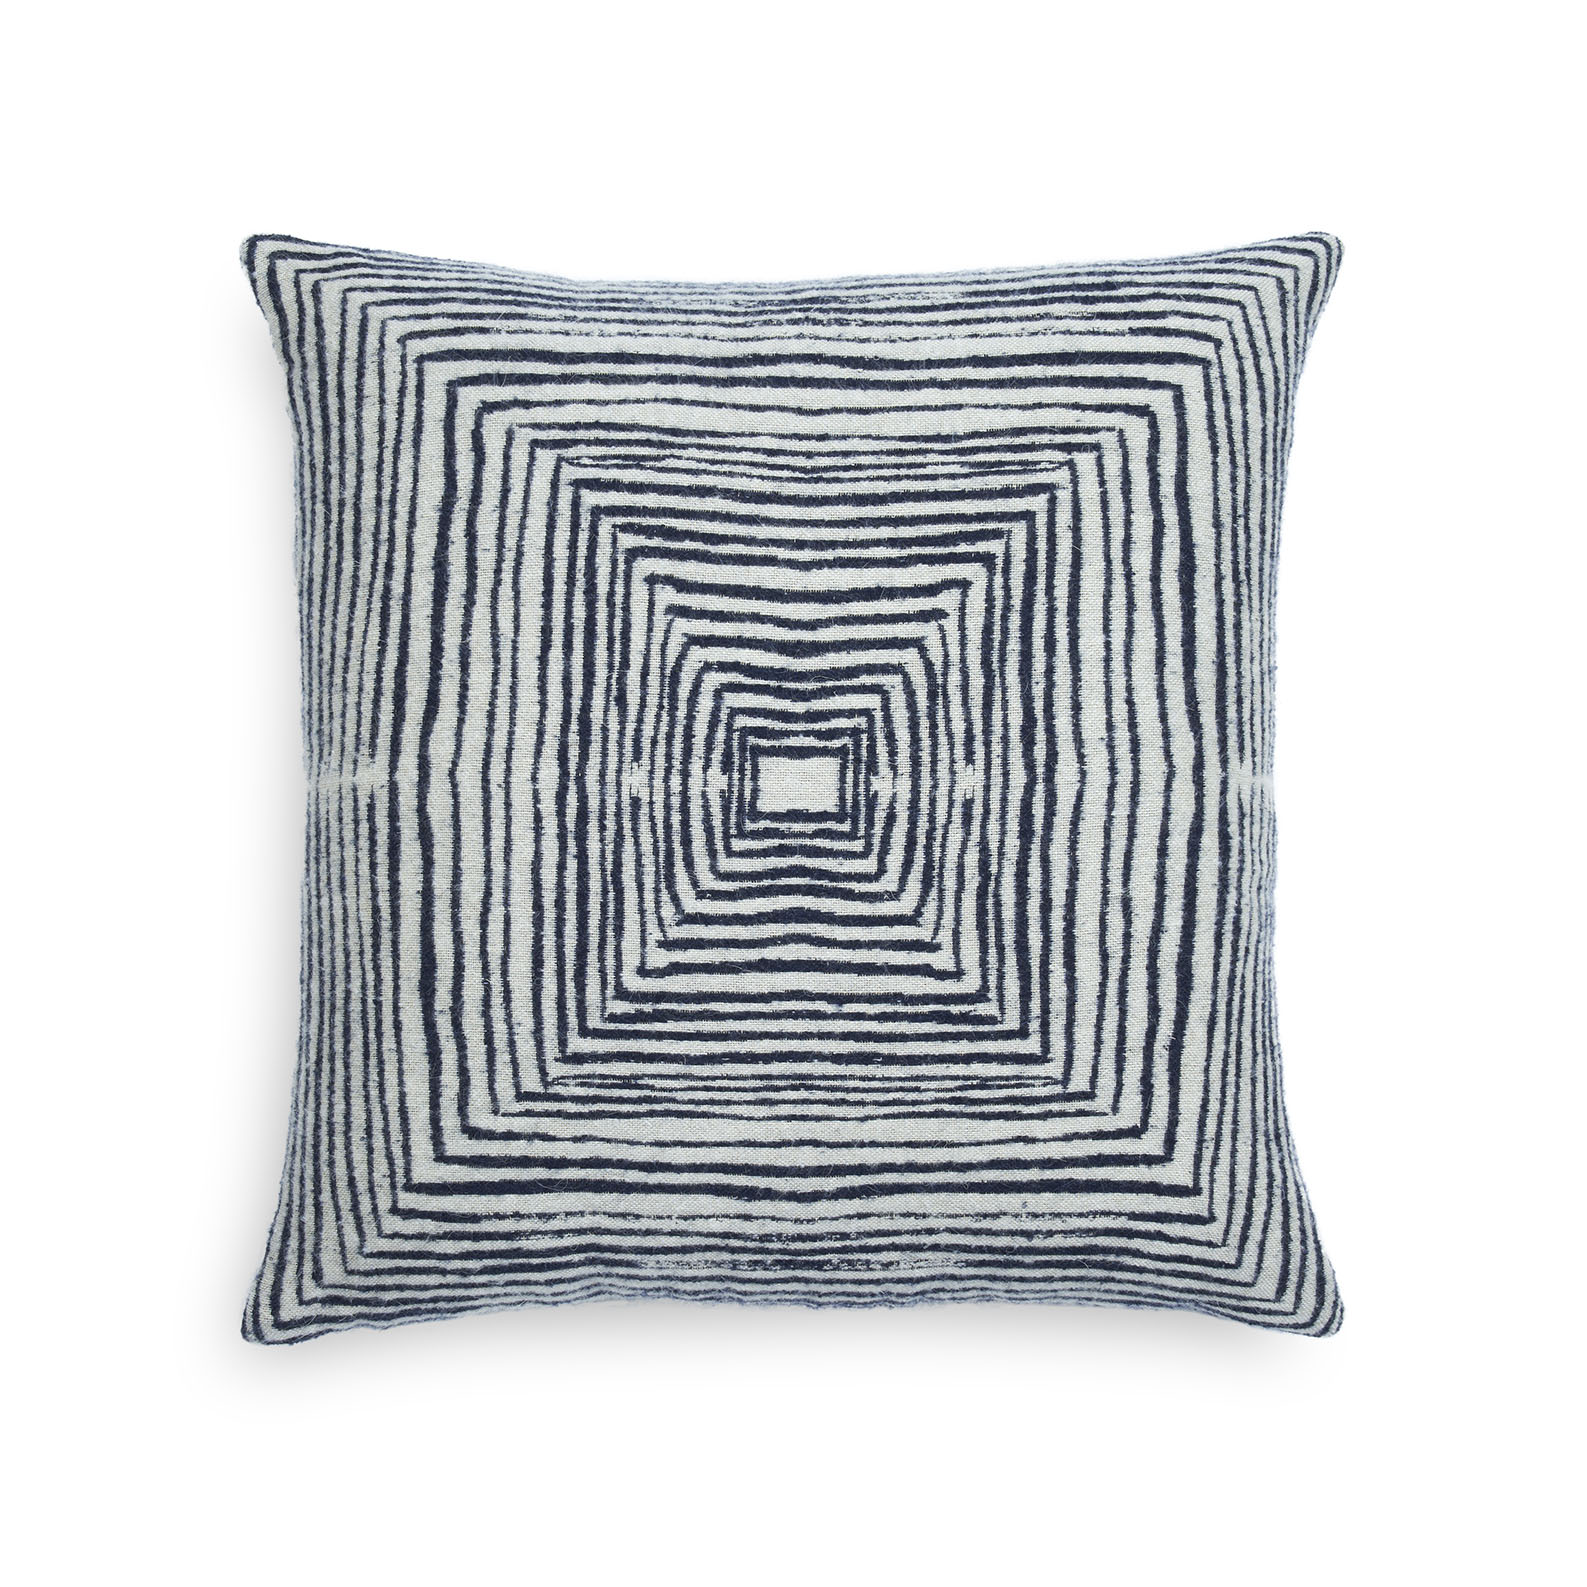 Linear Square cushion